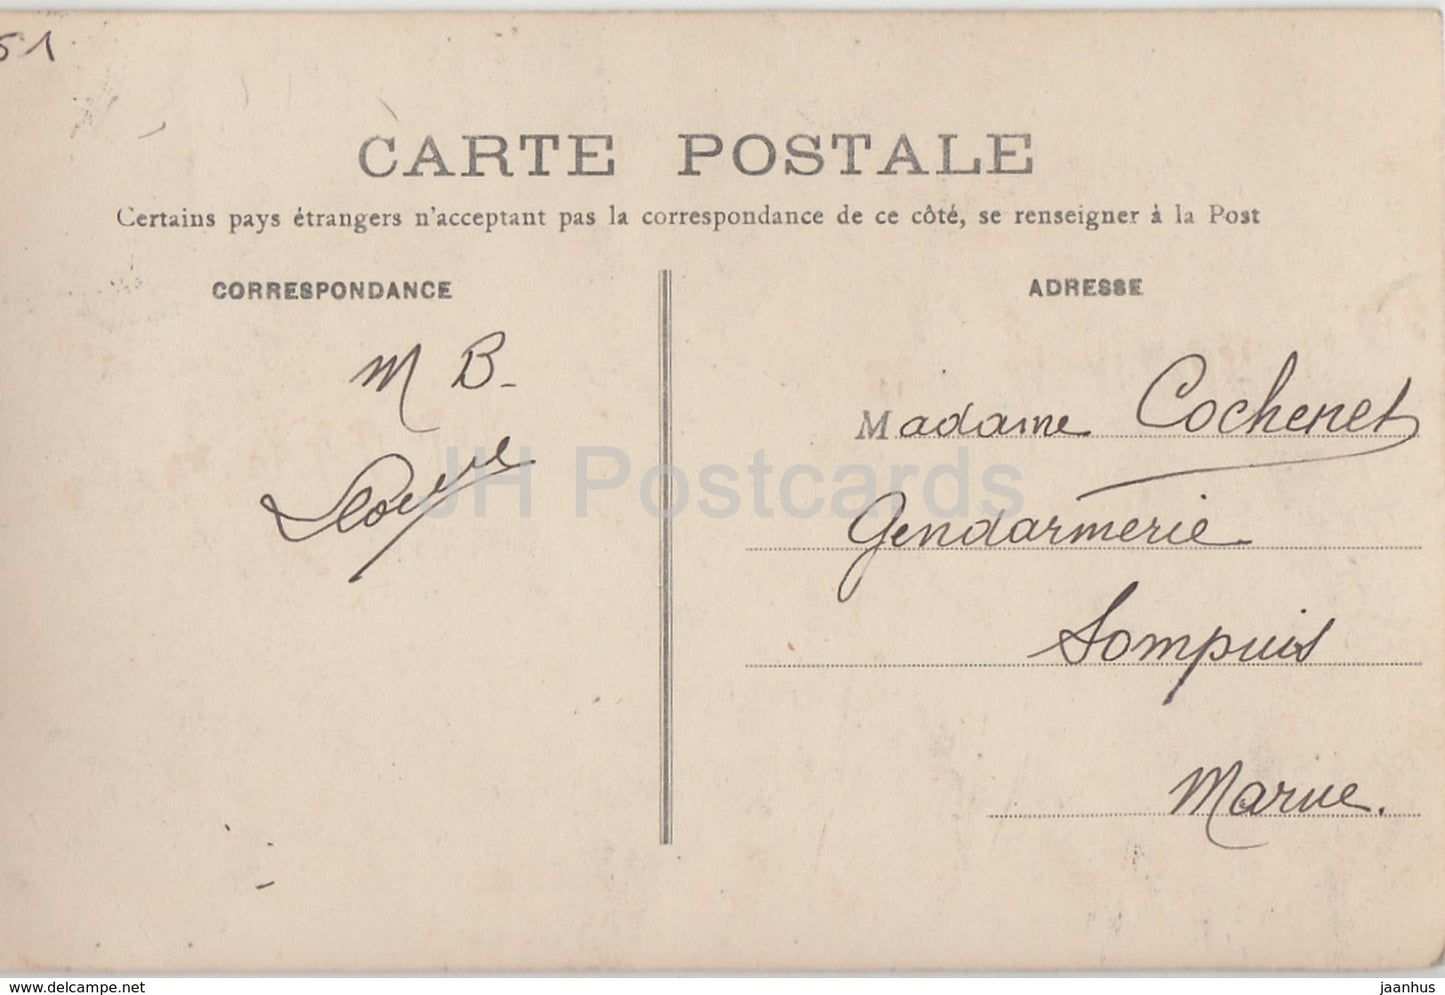 Epernay - Château de Boursault - château - carte postale ancienne - 1913 - France - occasion